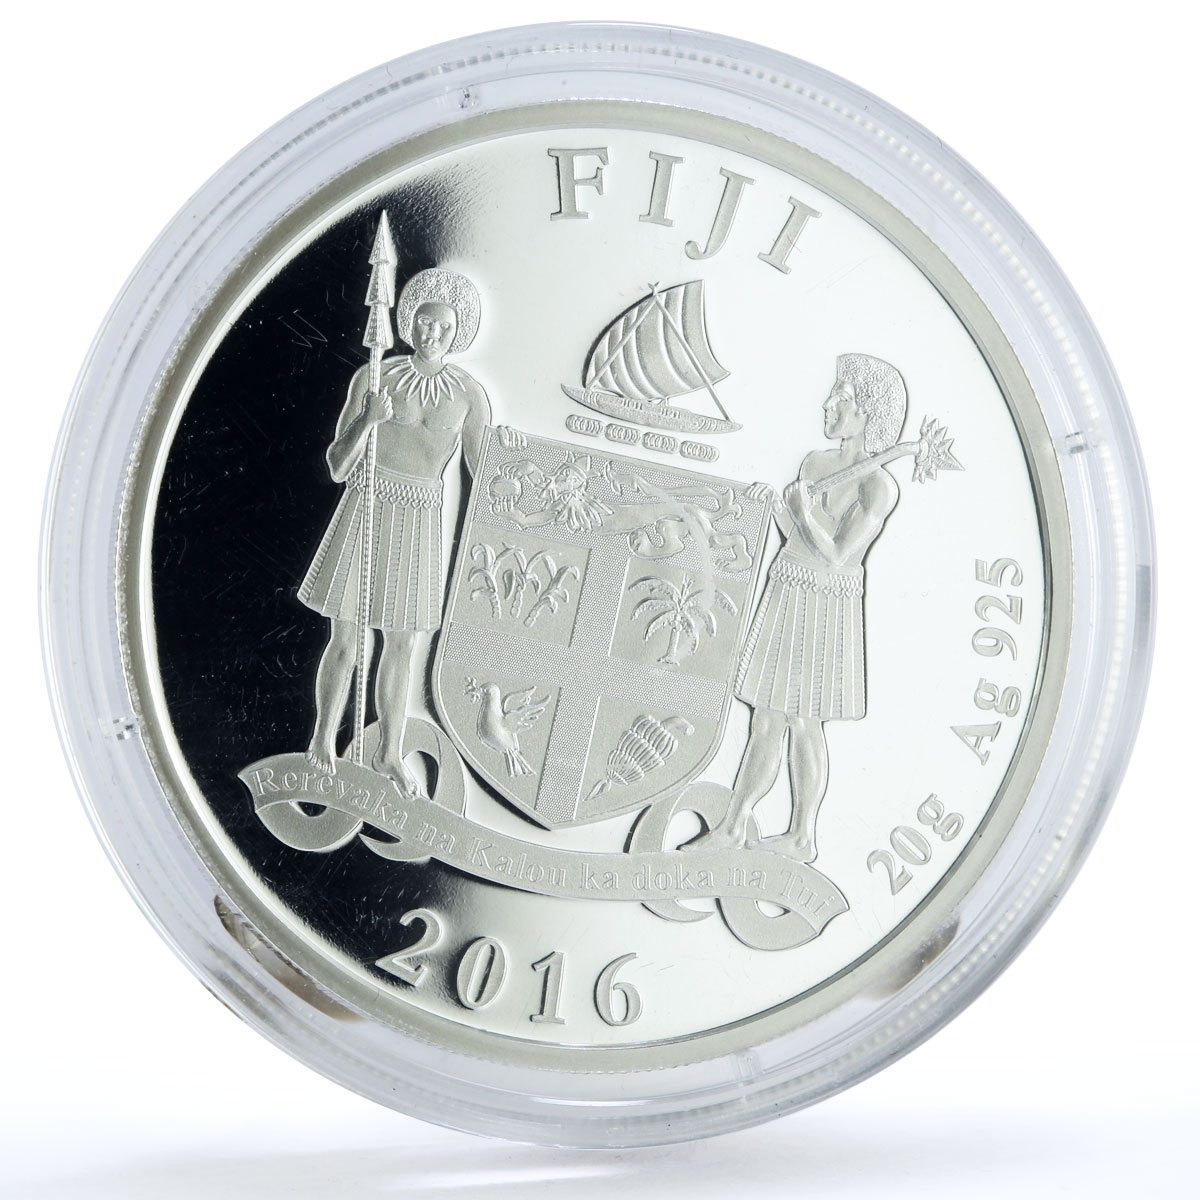 Fiji 1 dollar Trains Railways Magnetic Levitation Train proof silver coin 2016